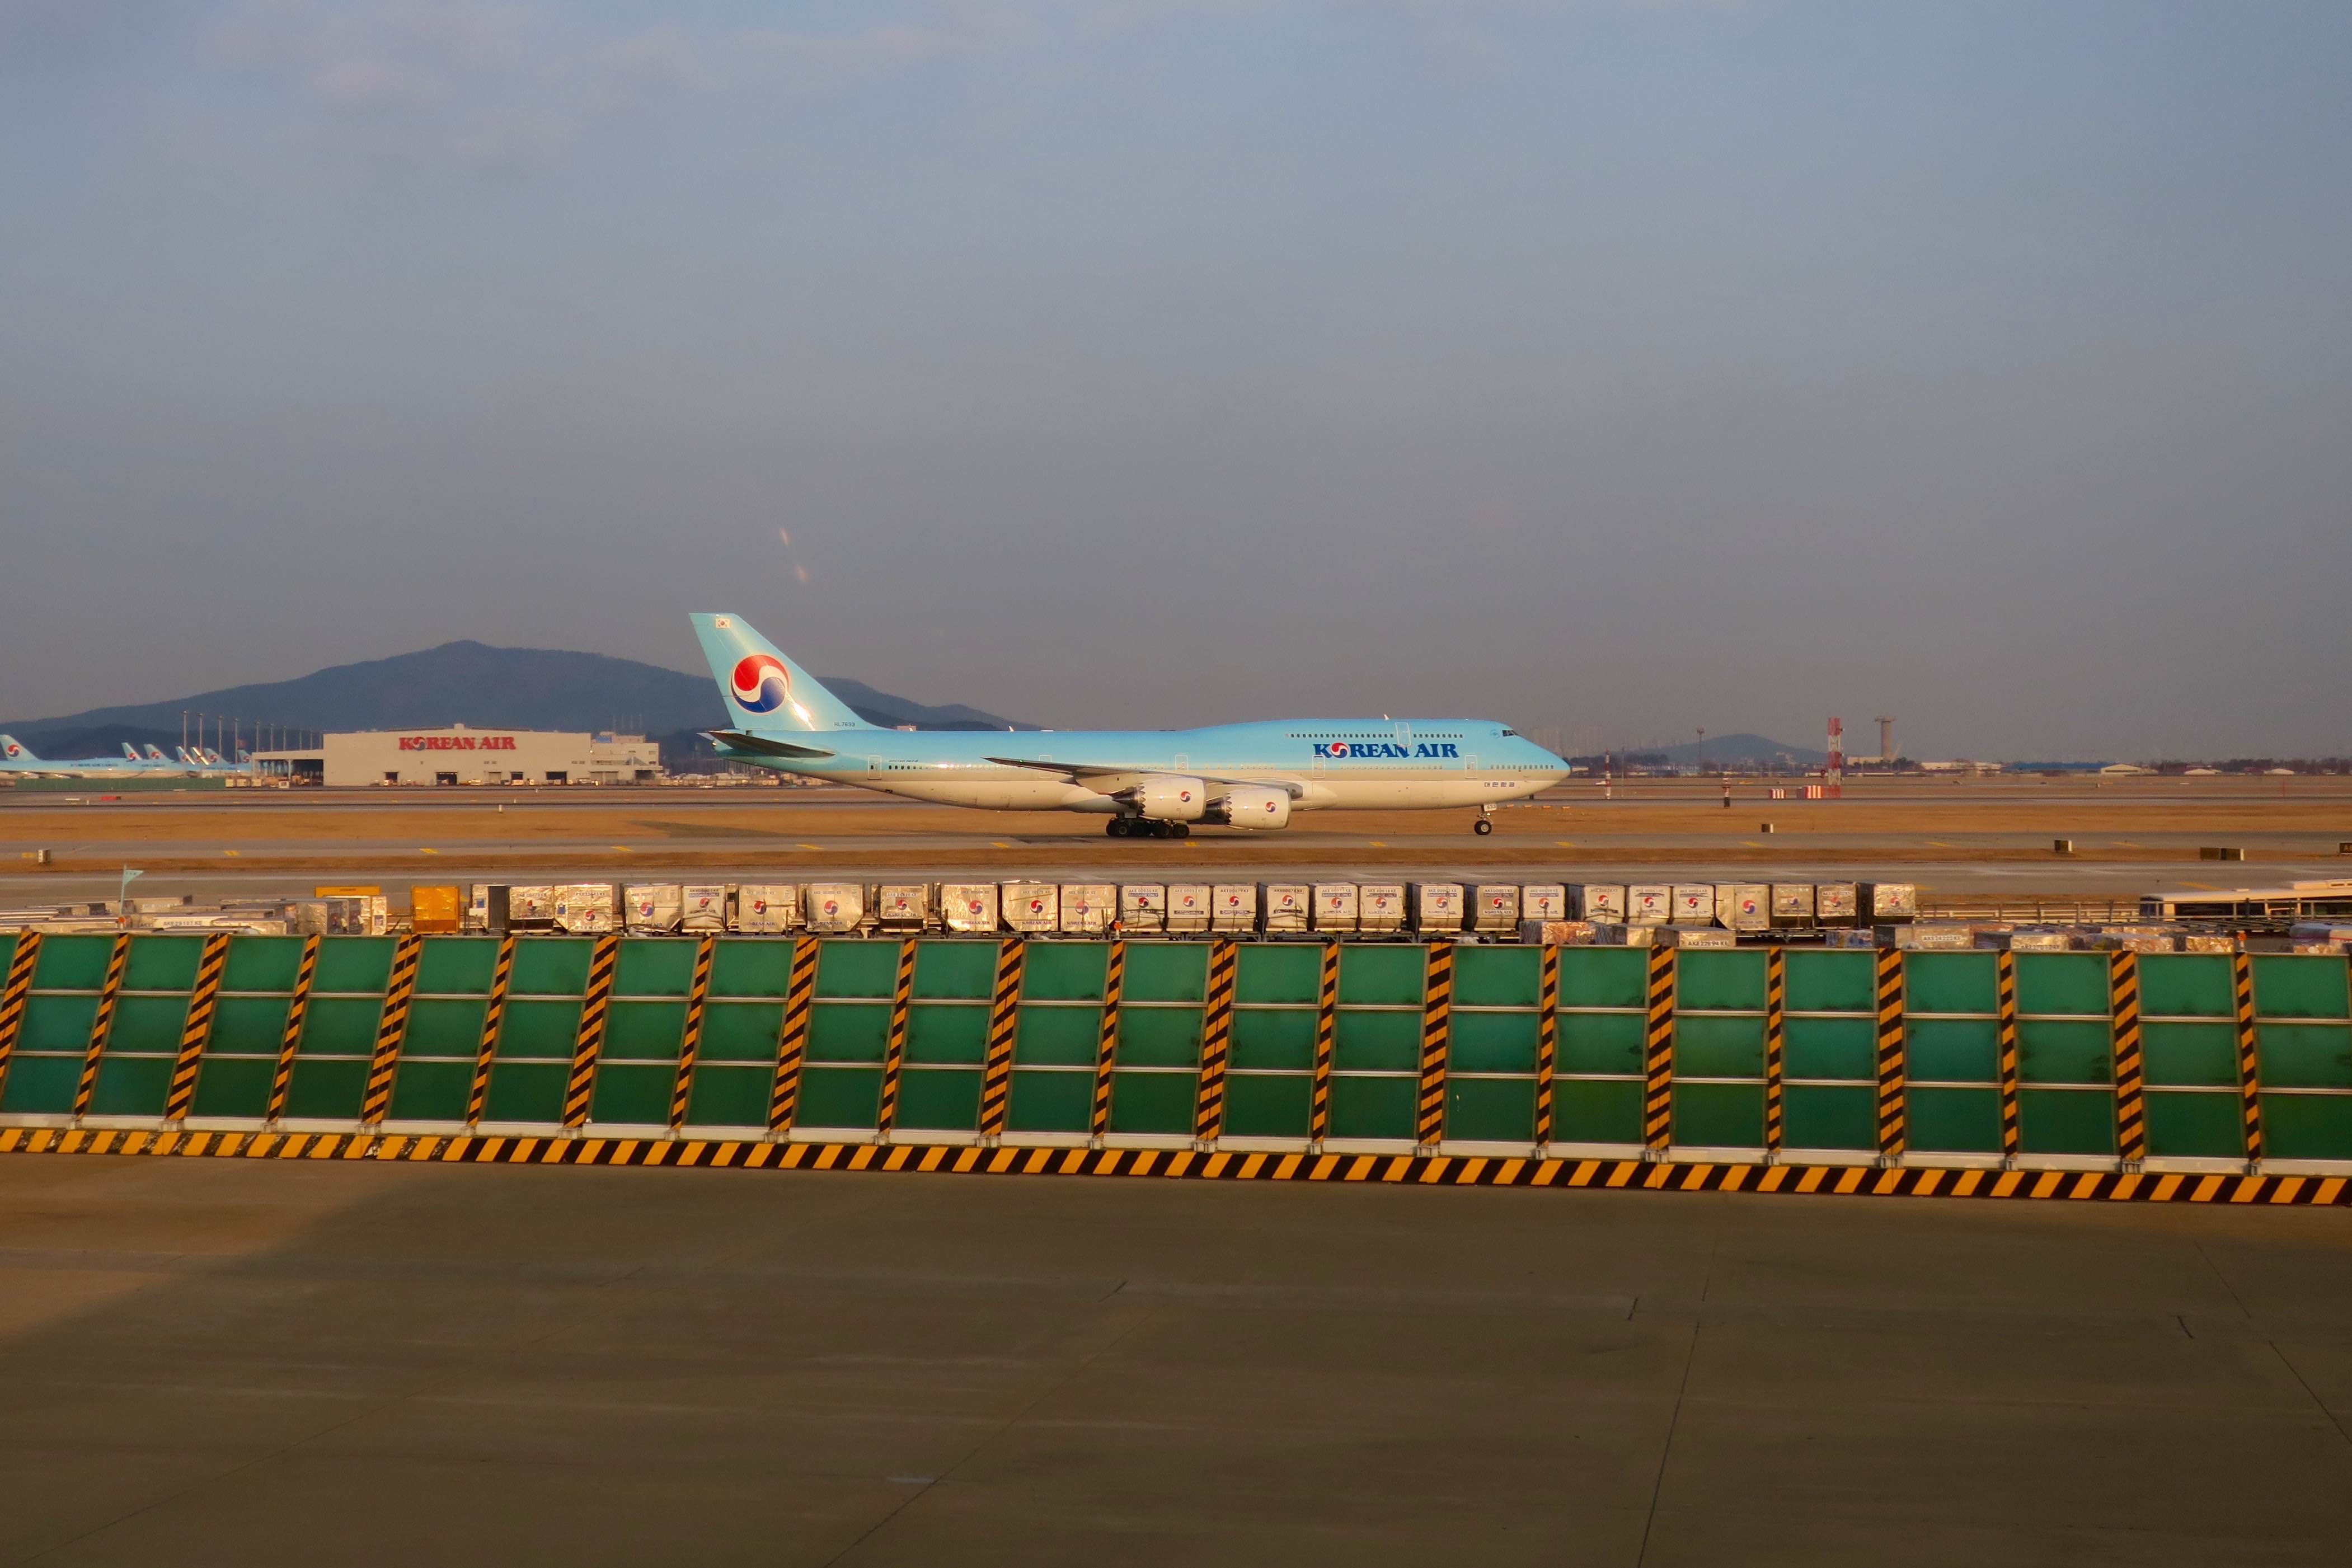 Korean Air plane in runway